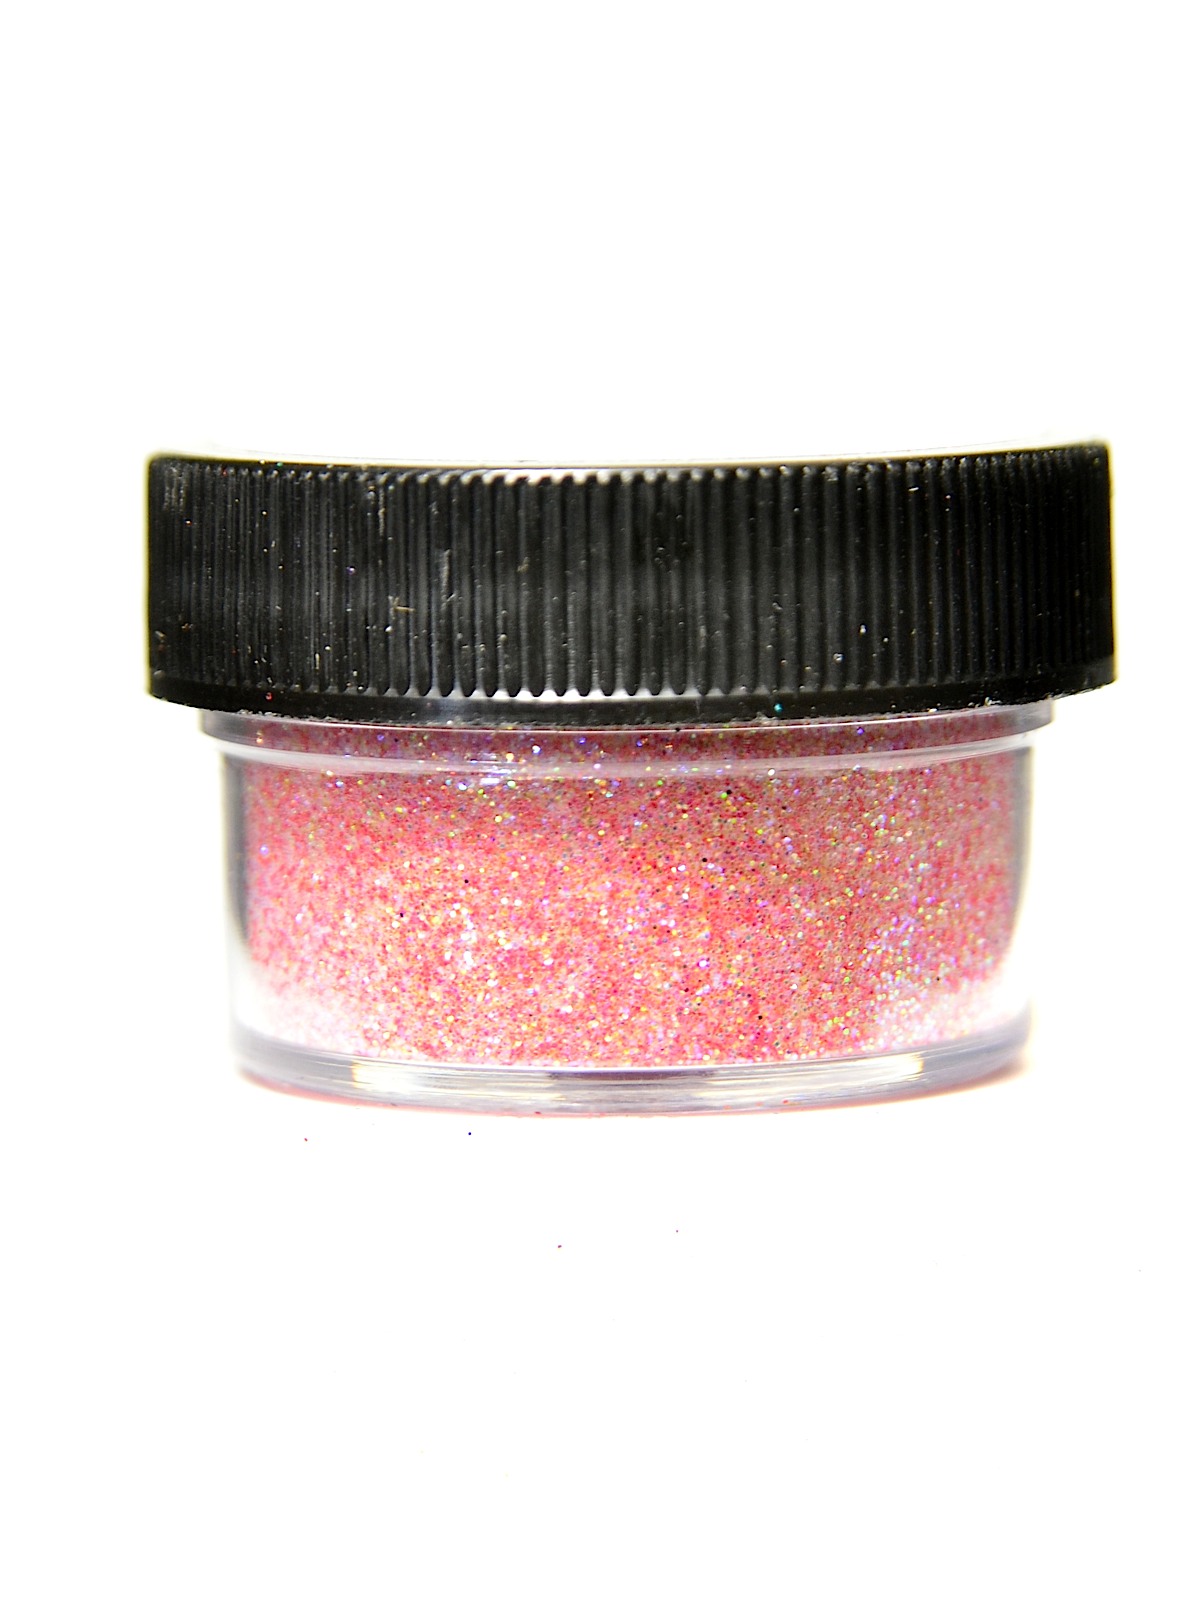 Ultrafine Transparent Glitter Just Peachy 1 2 Oz. Jar